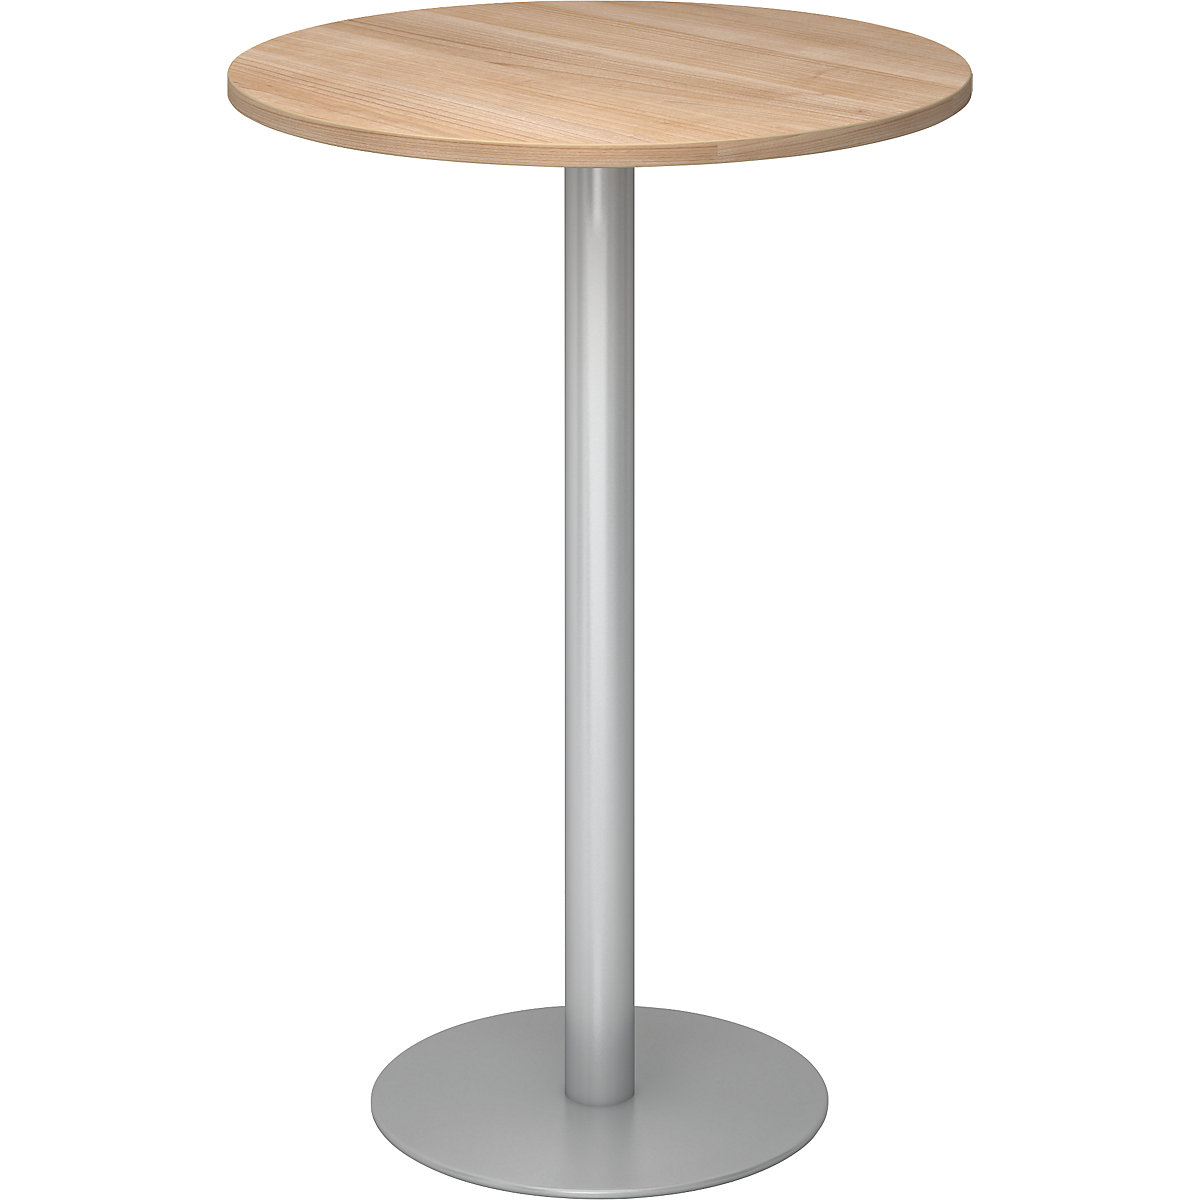 Pedestal table, Ø 800 mm, 1116 mm high, silver frame, tabletop in walnut finish-7